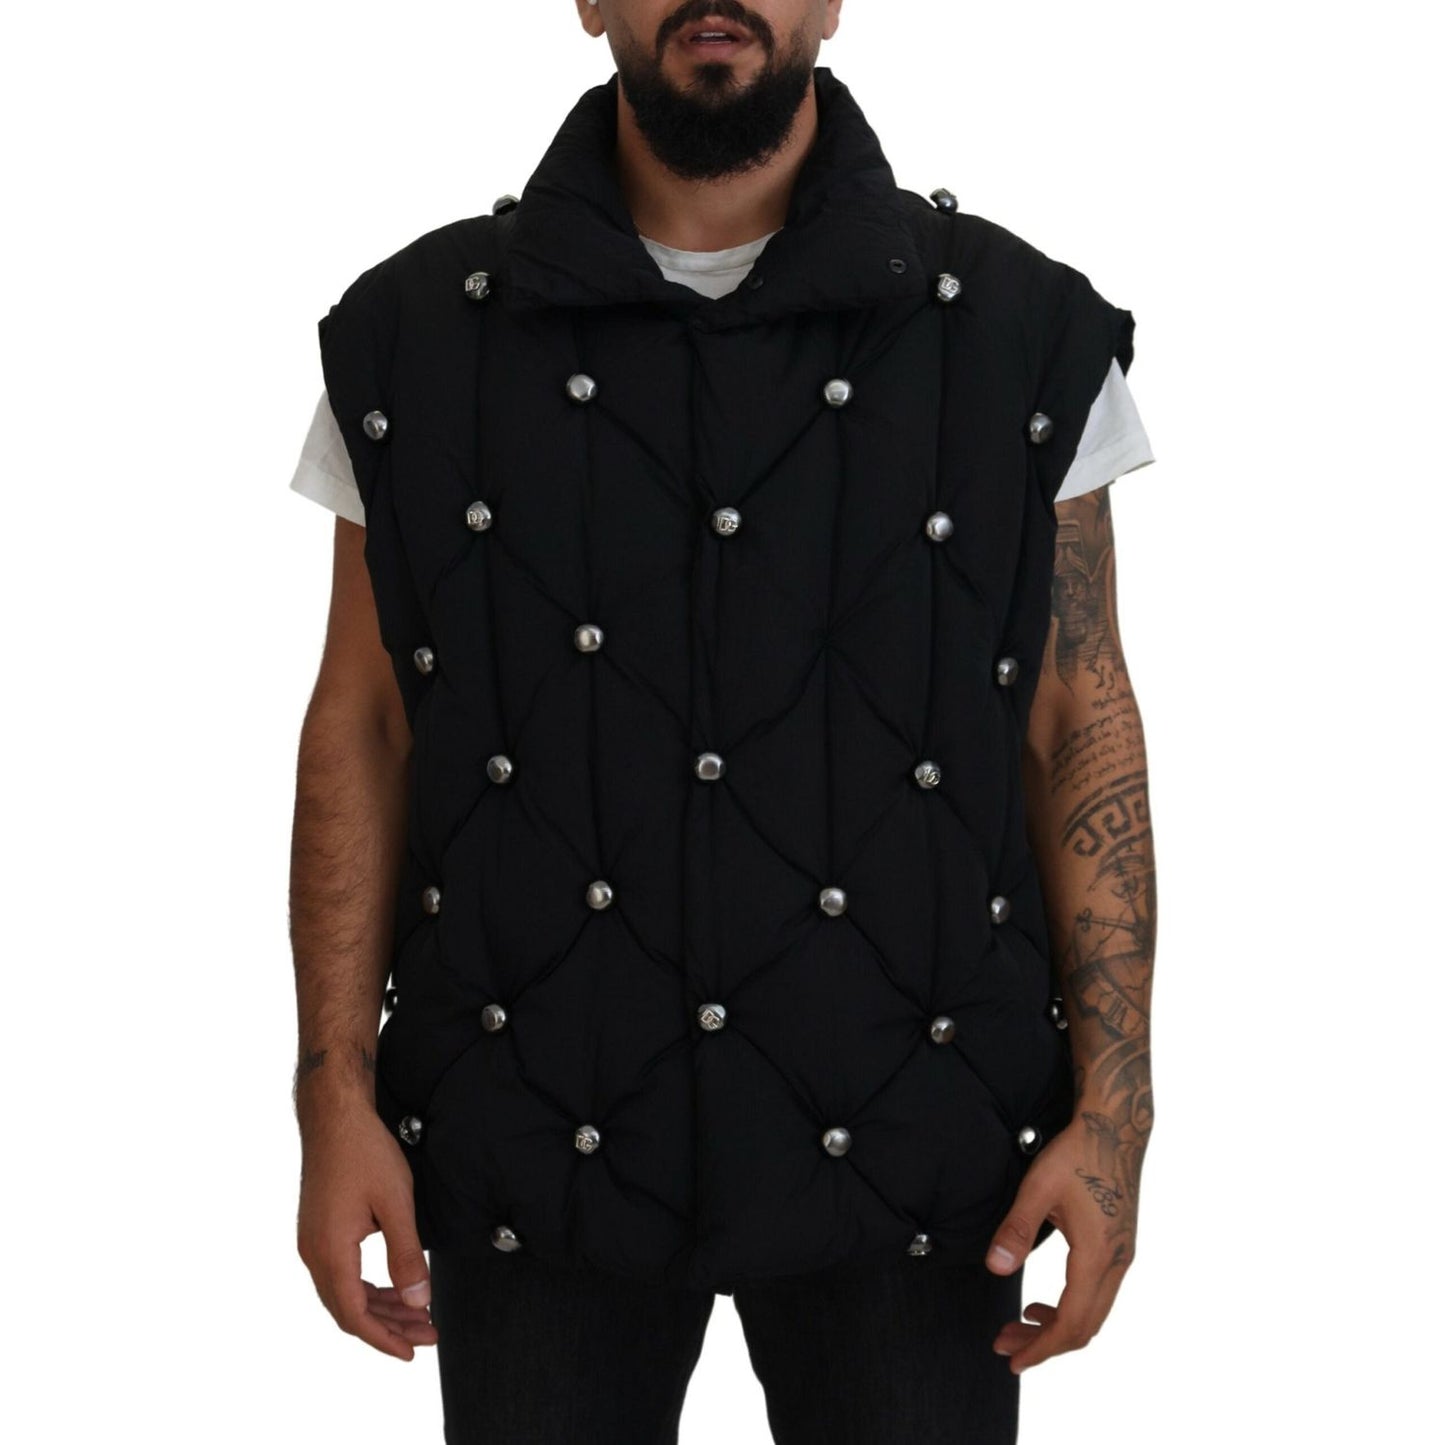 Dolce & Gabbana Elegant Black Sleeveless Vest Jacket black-sleeveless-dg-metal-embellishment-jacket